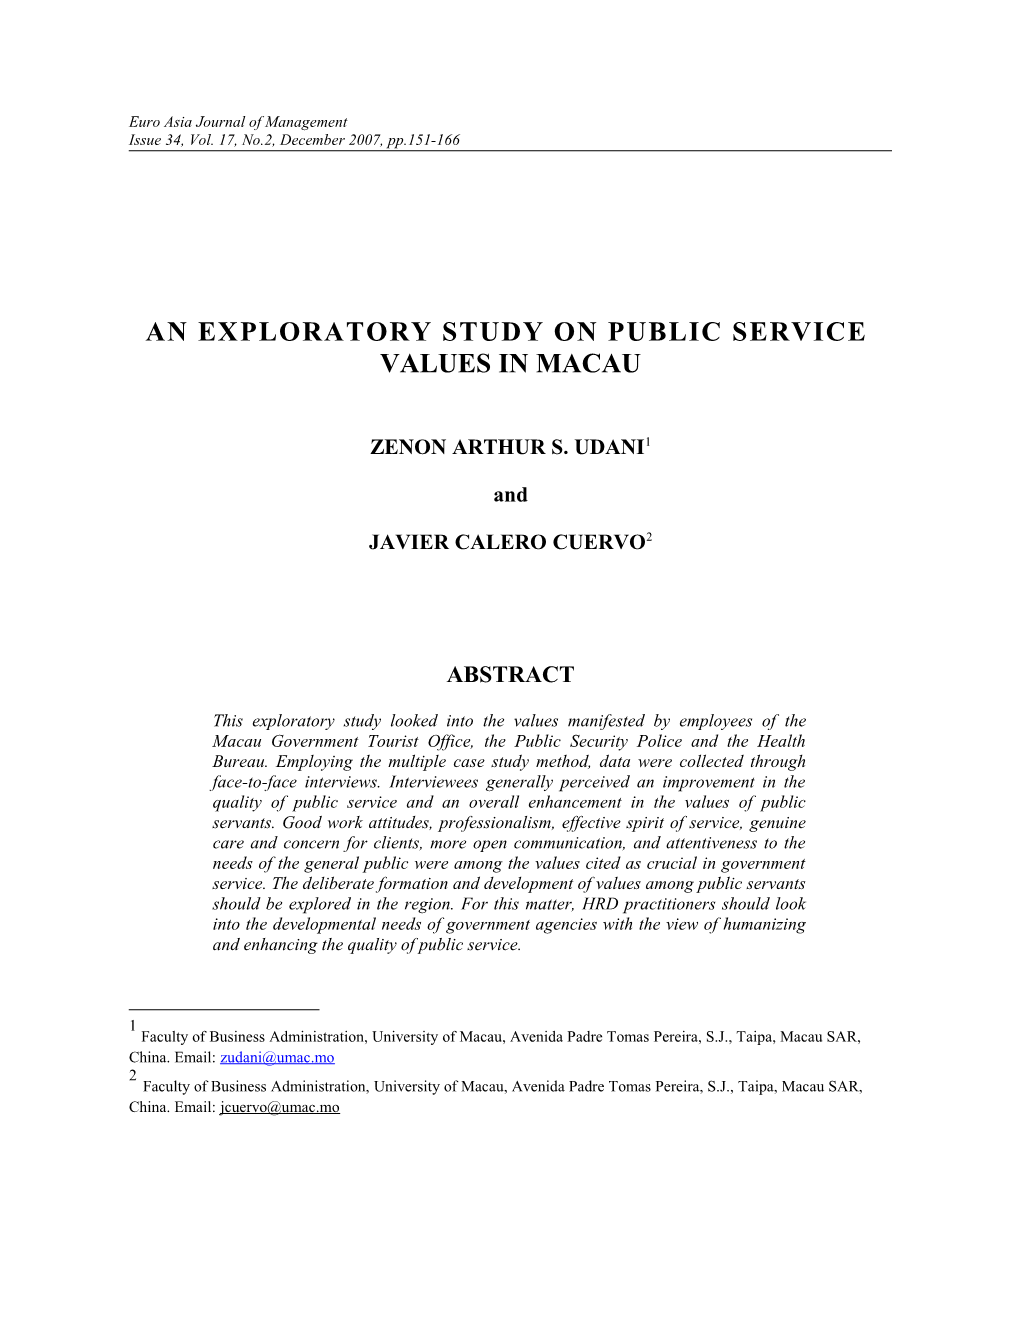 An Exploratory Study on Public Service Values in Macau